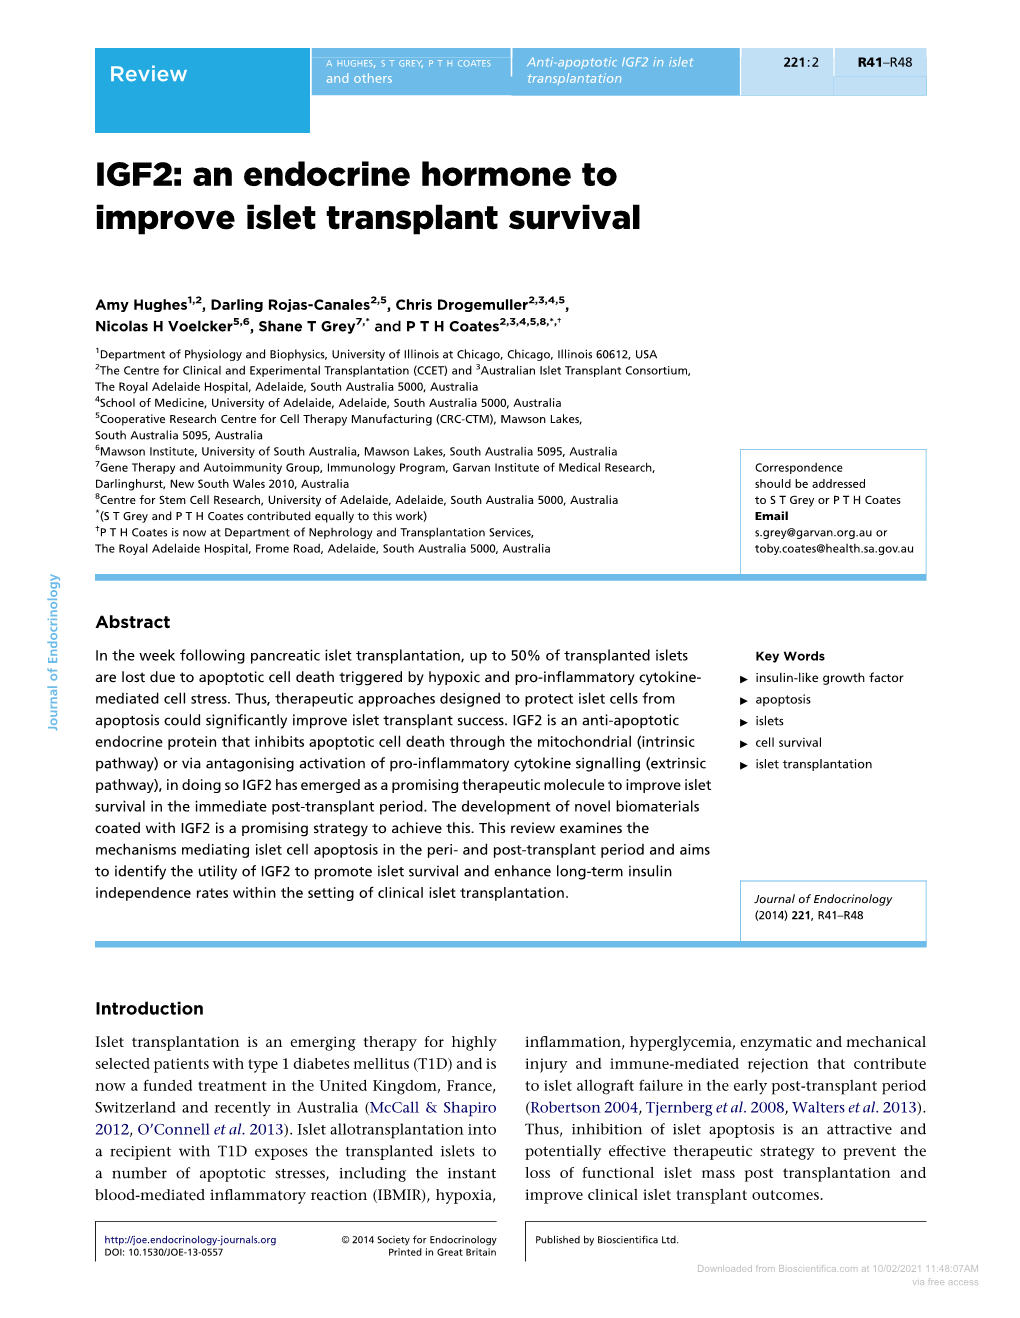 IGF2: an Endocrine Hormone to Improve Islet Transplant Survival